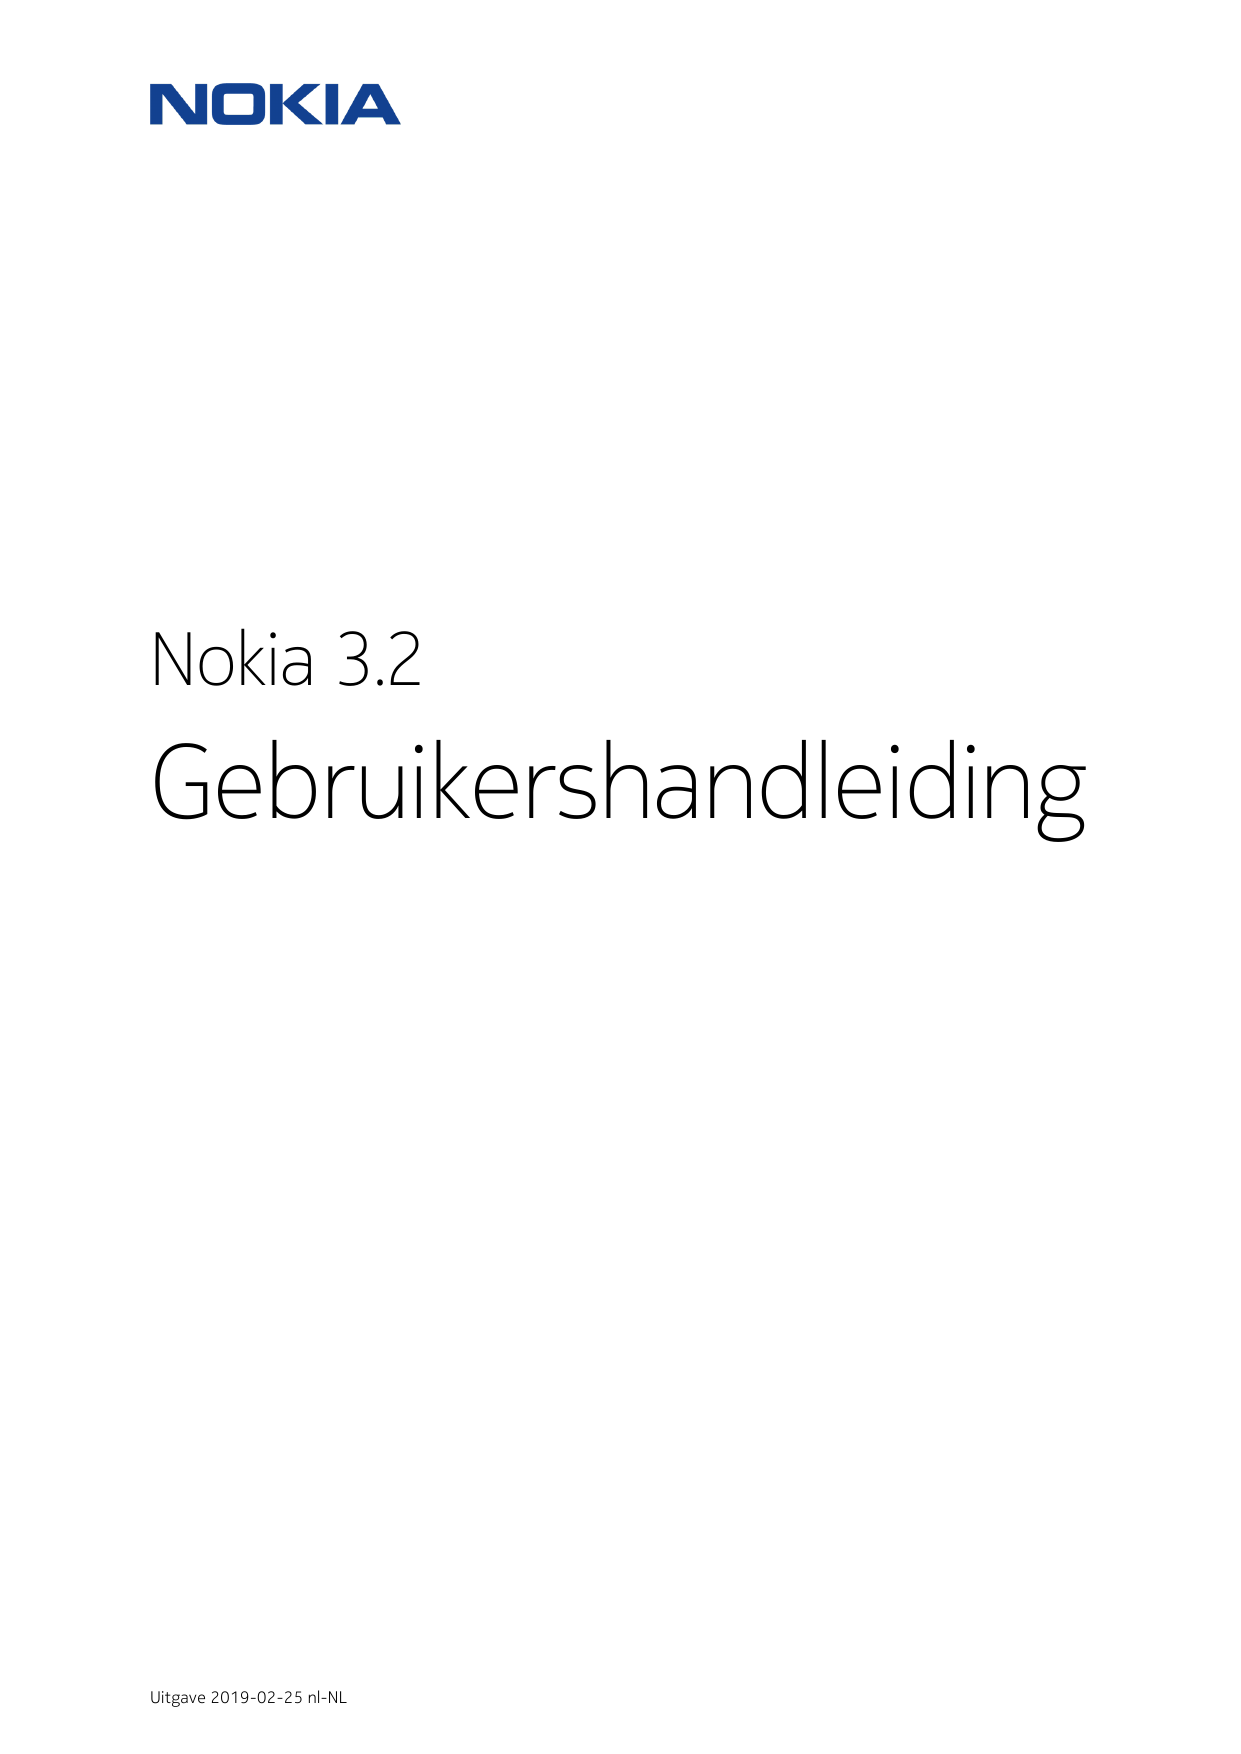 Nokia 3.2GebruikershandleidingUitgave 2019-02-25 nl-NL